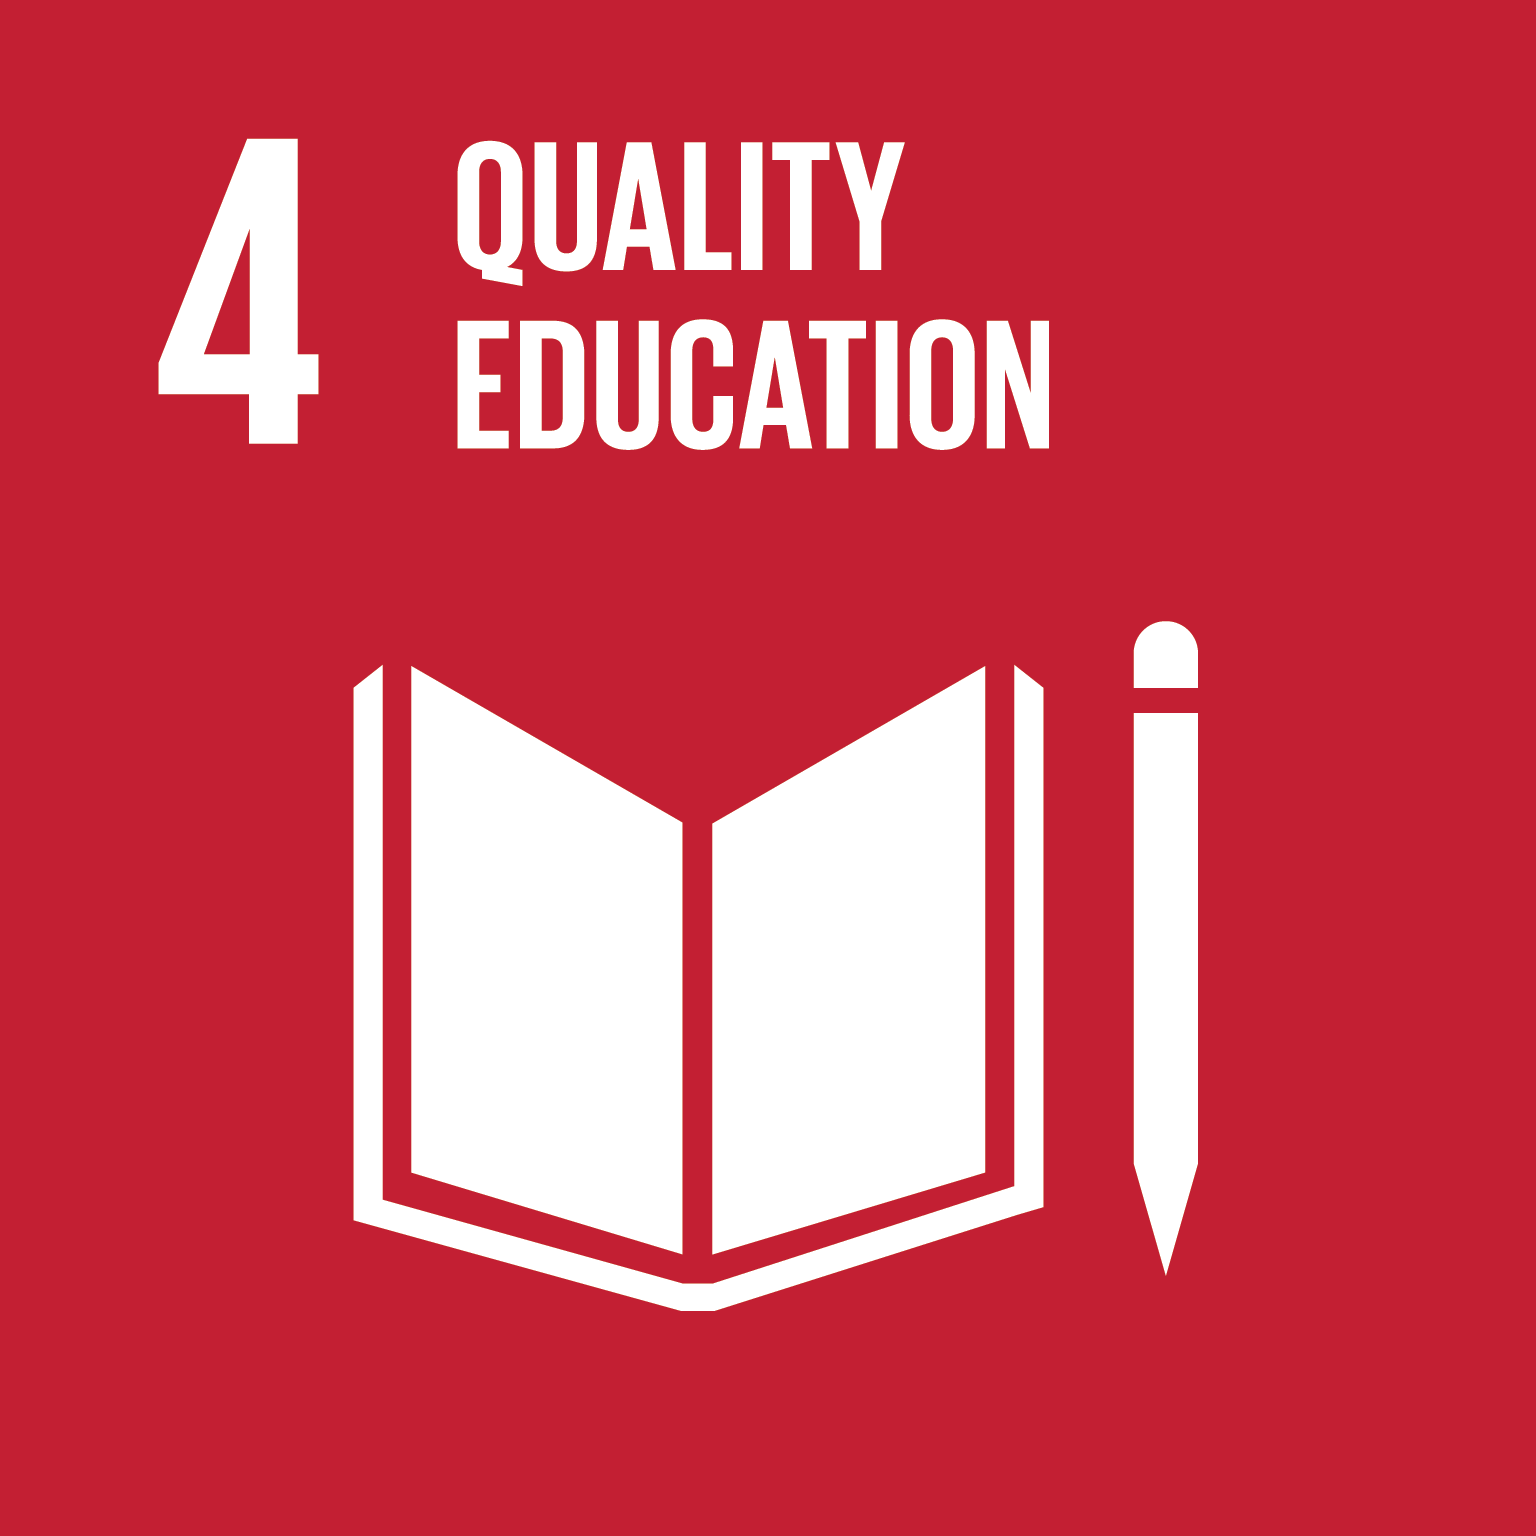 Education – United Nations Sustainable Development